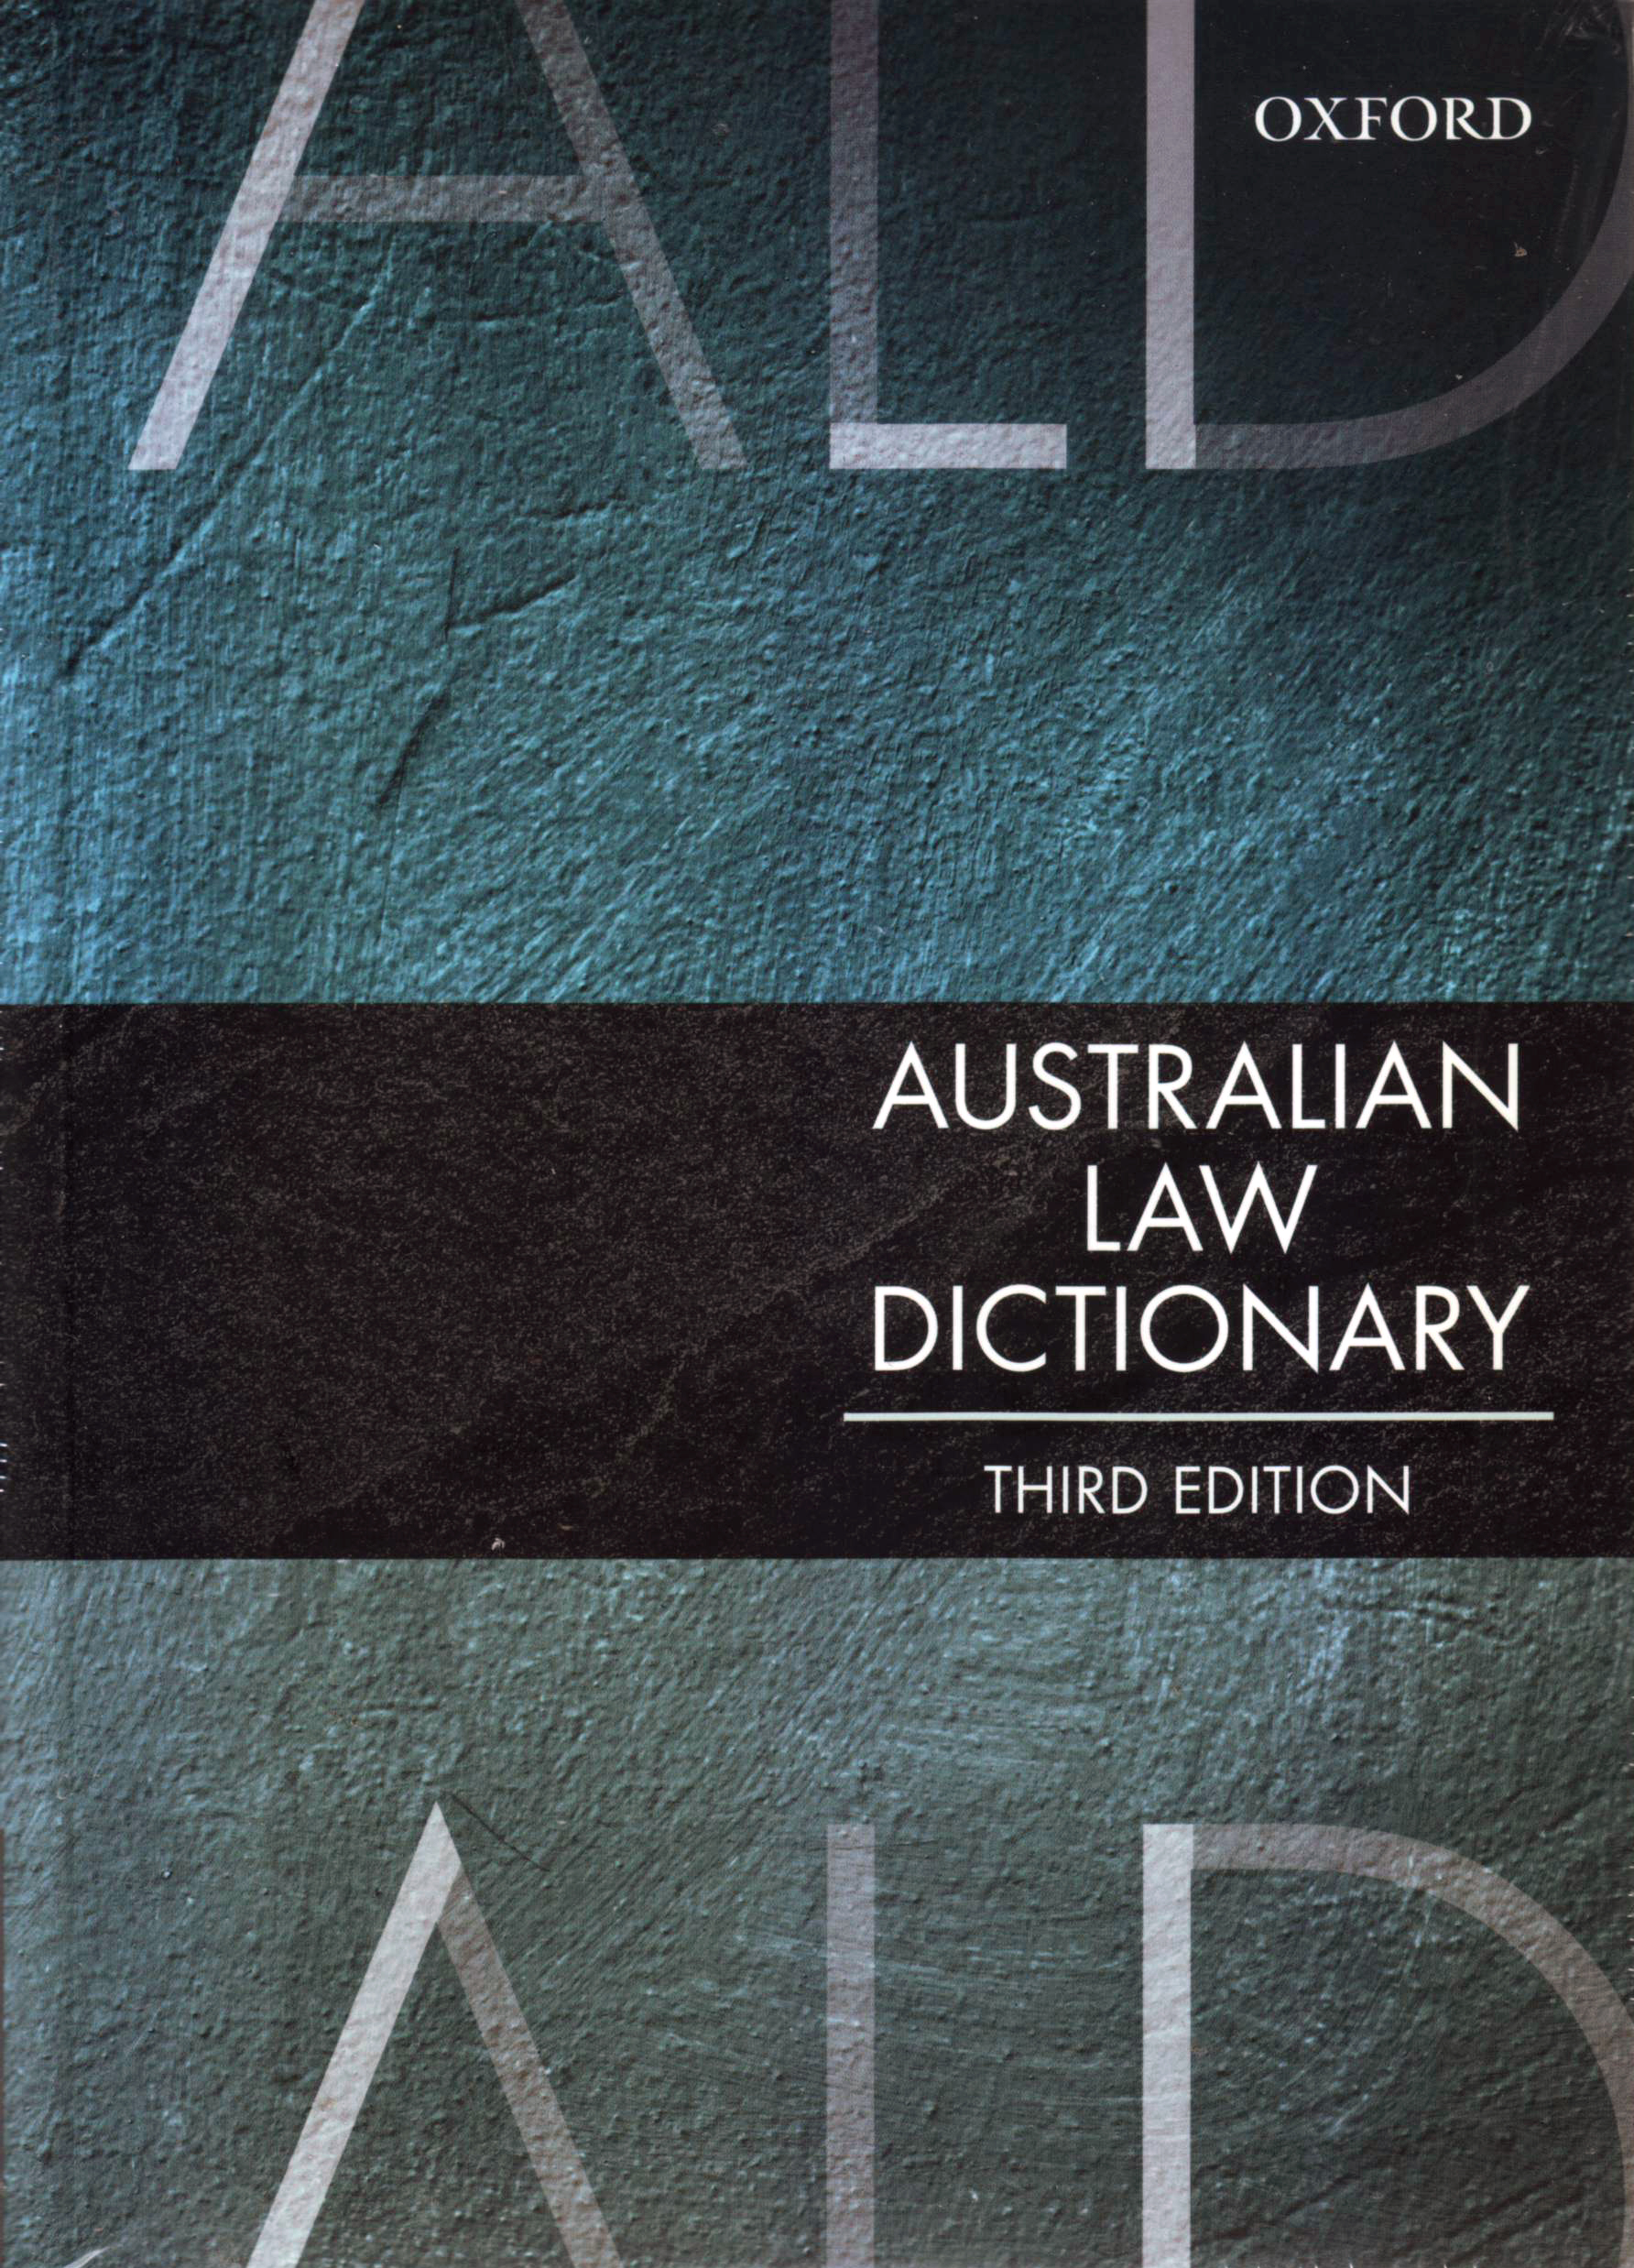 Australian Law Dictionary e3